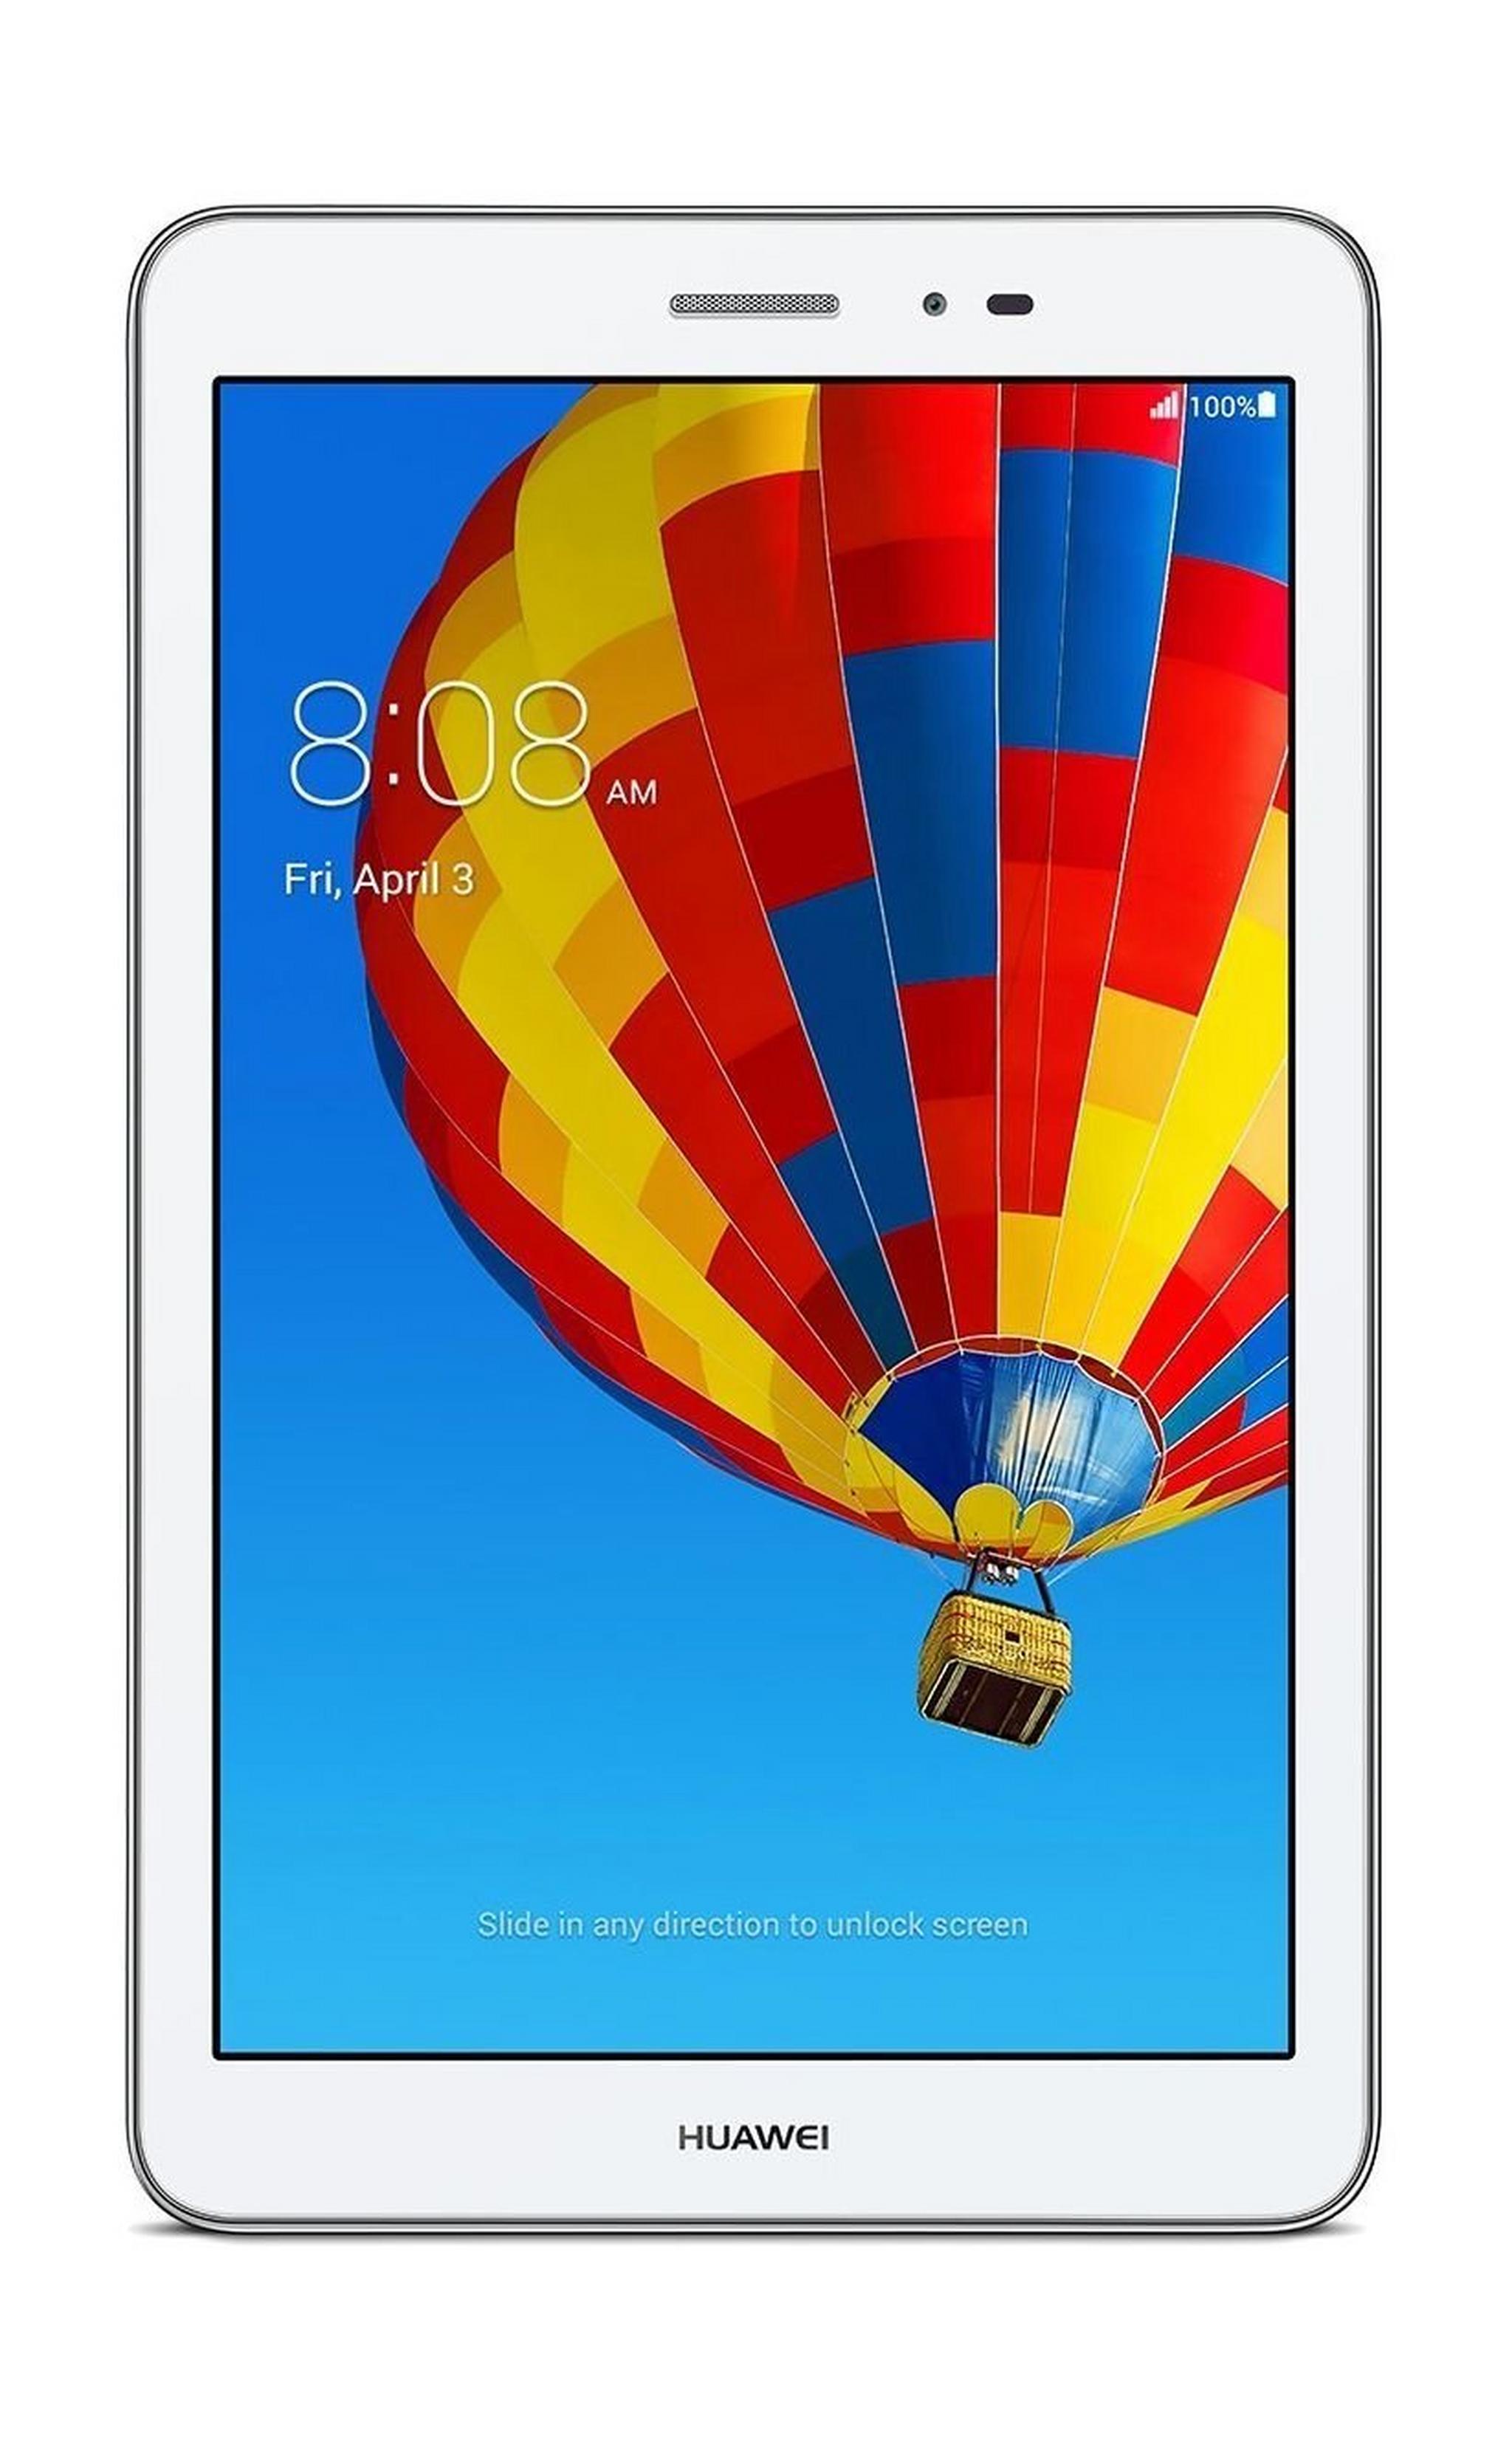 Huawei MediaPad T1 8GB 5MP 3G 8-inch Tablet (S8-701U) – Gold